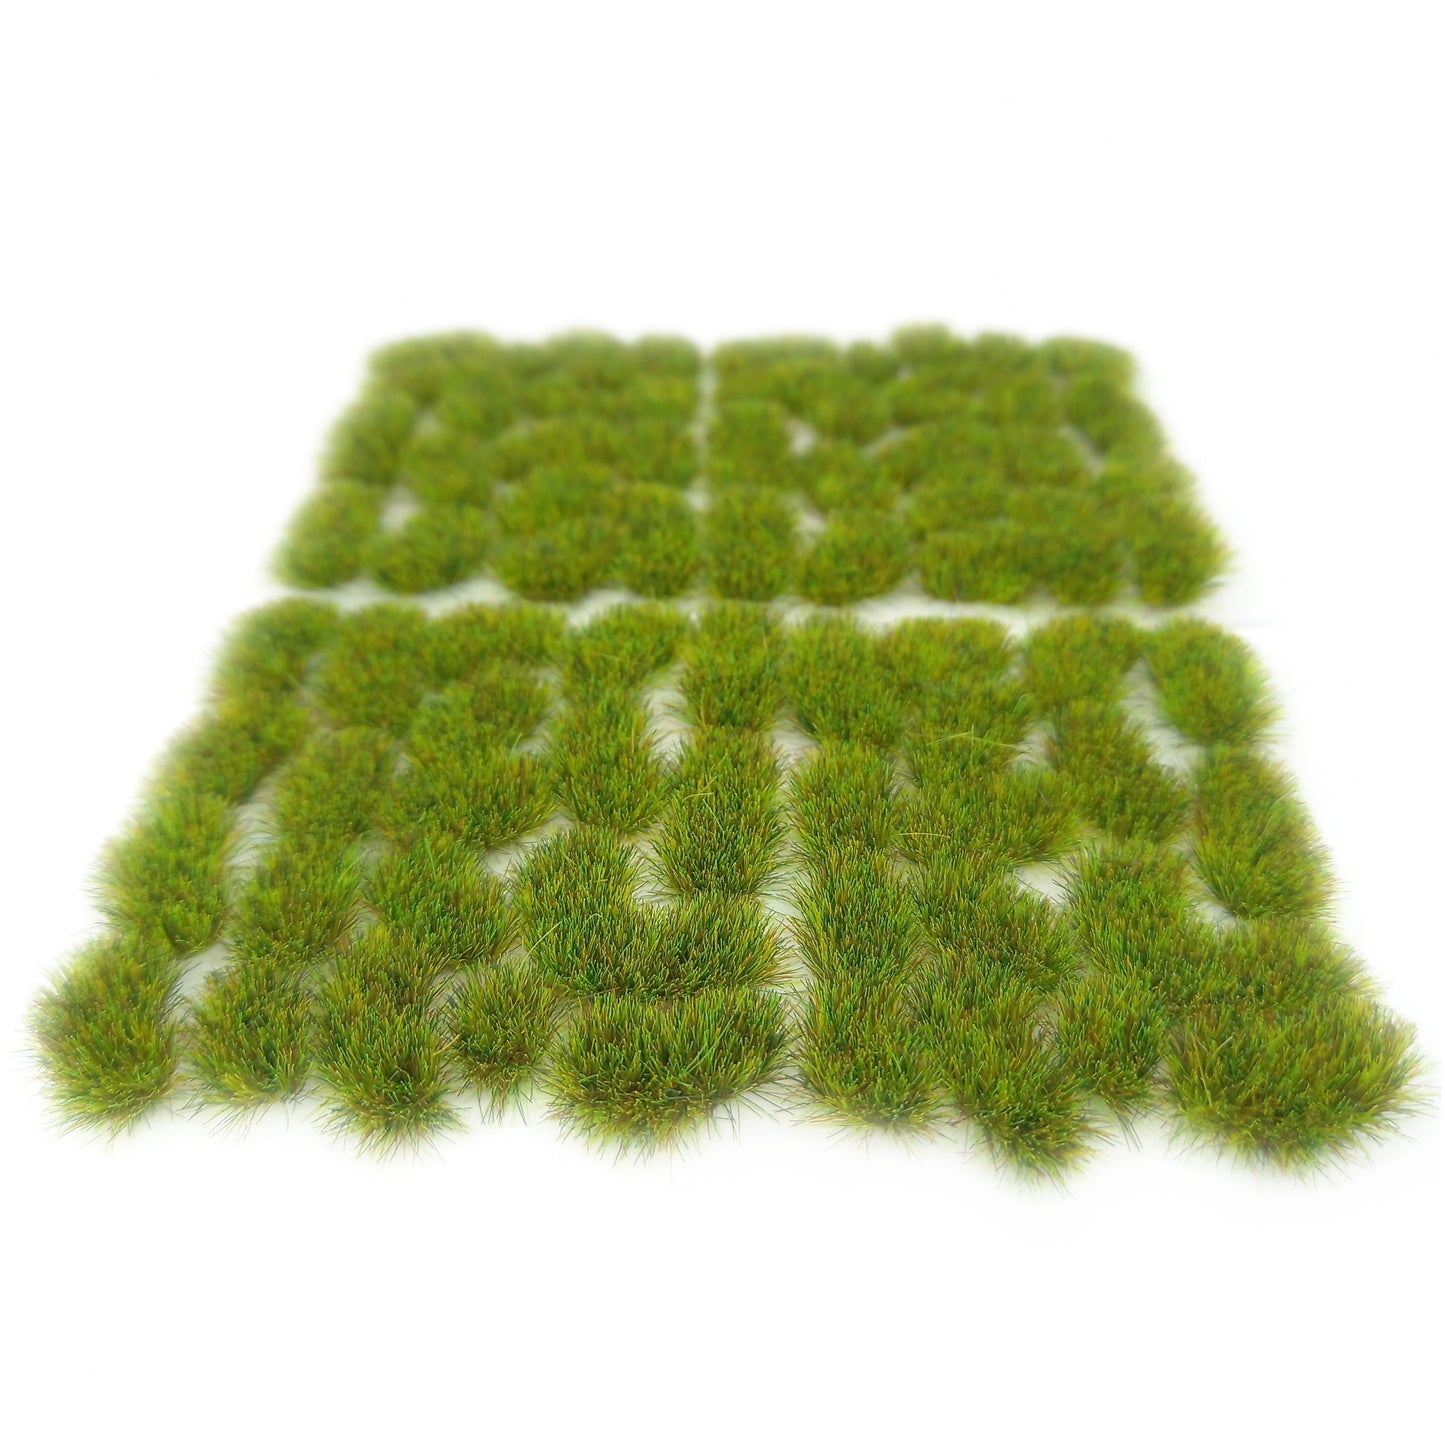 Autumn - 4mm -  Irregular static grass tufts